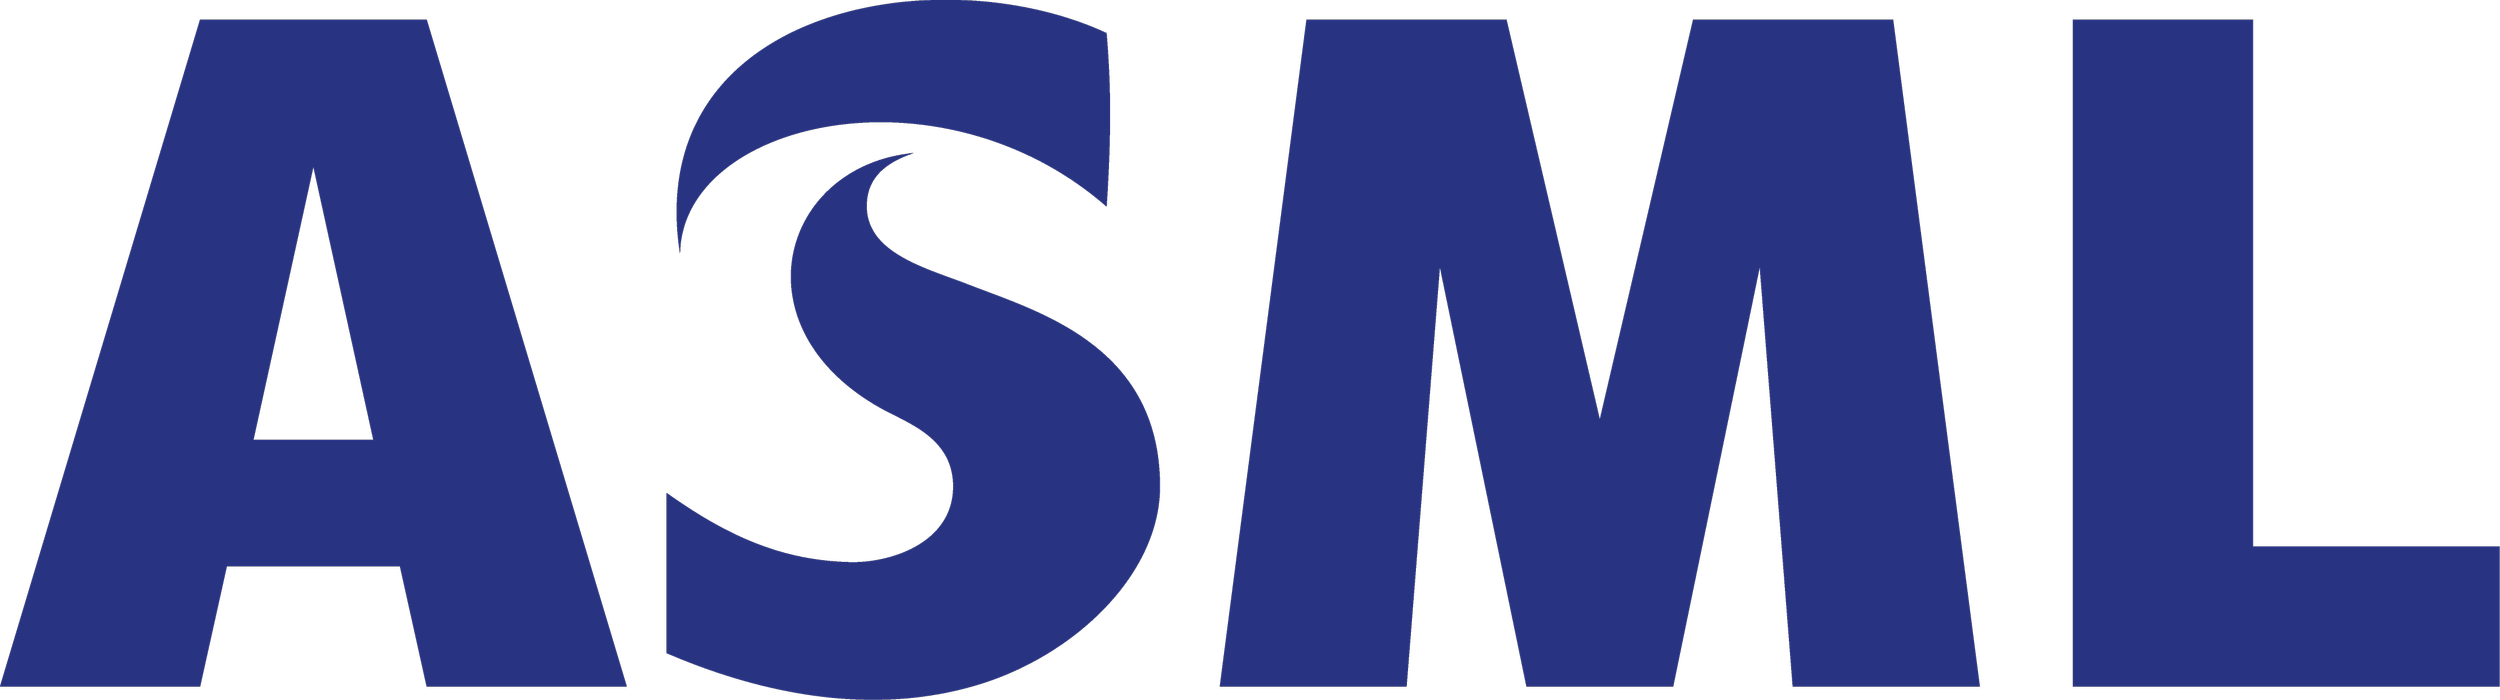 ASML_Logo_Blue_Ai_Format_CMYK.png